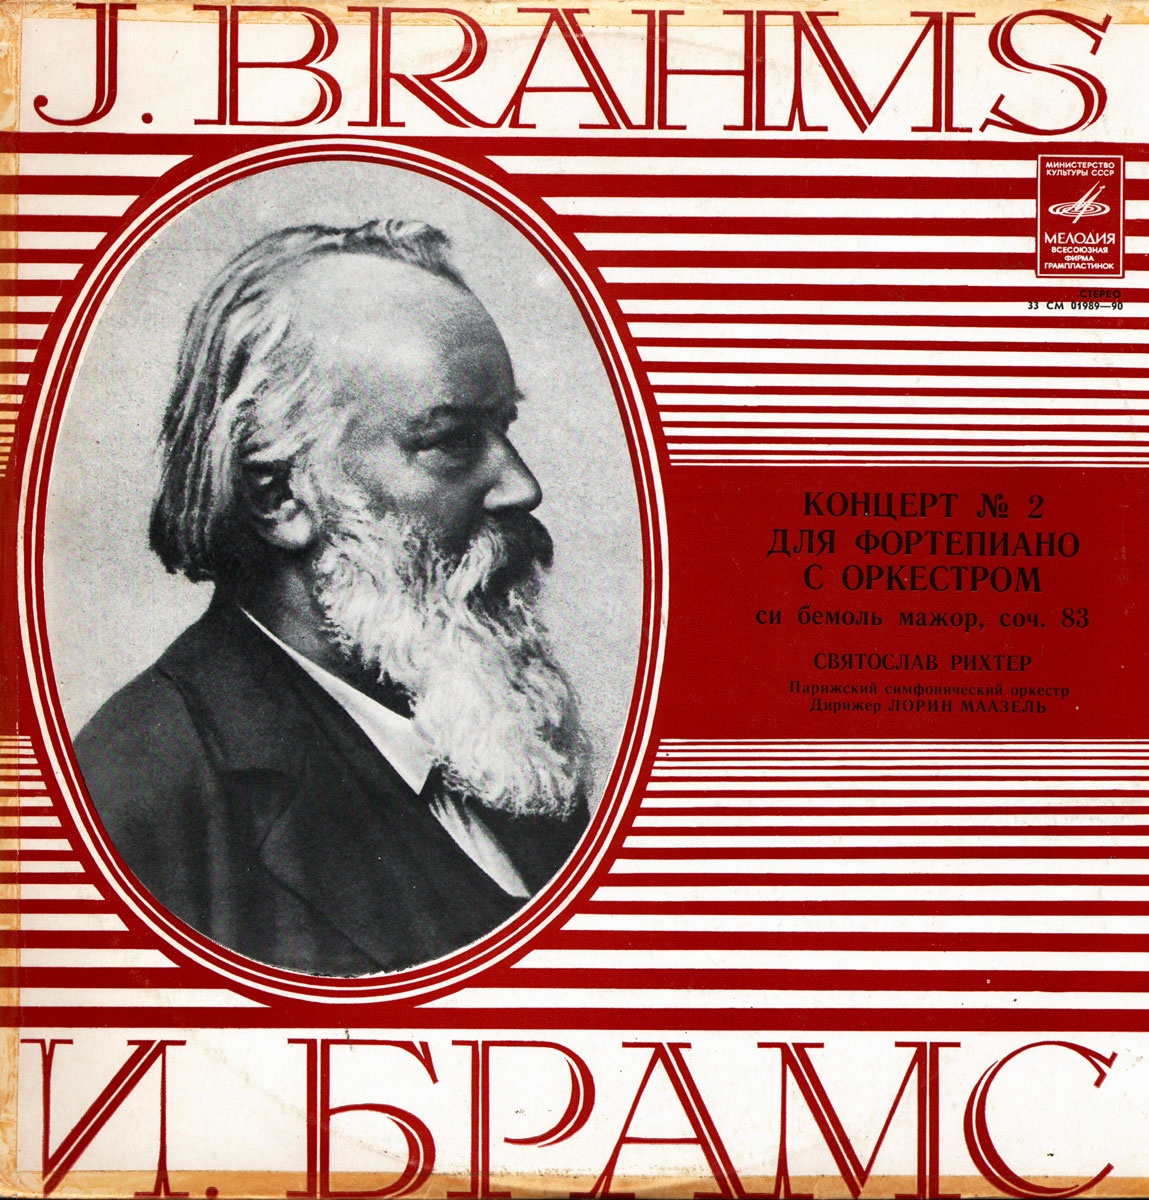 И. Брамс: Концерт № 2 для ф-но с оркестром (Святослав Рихтер)